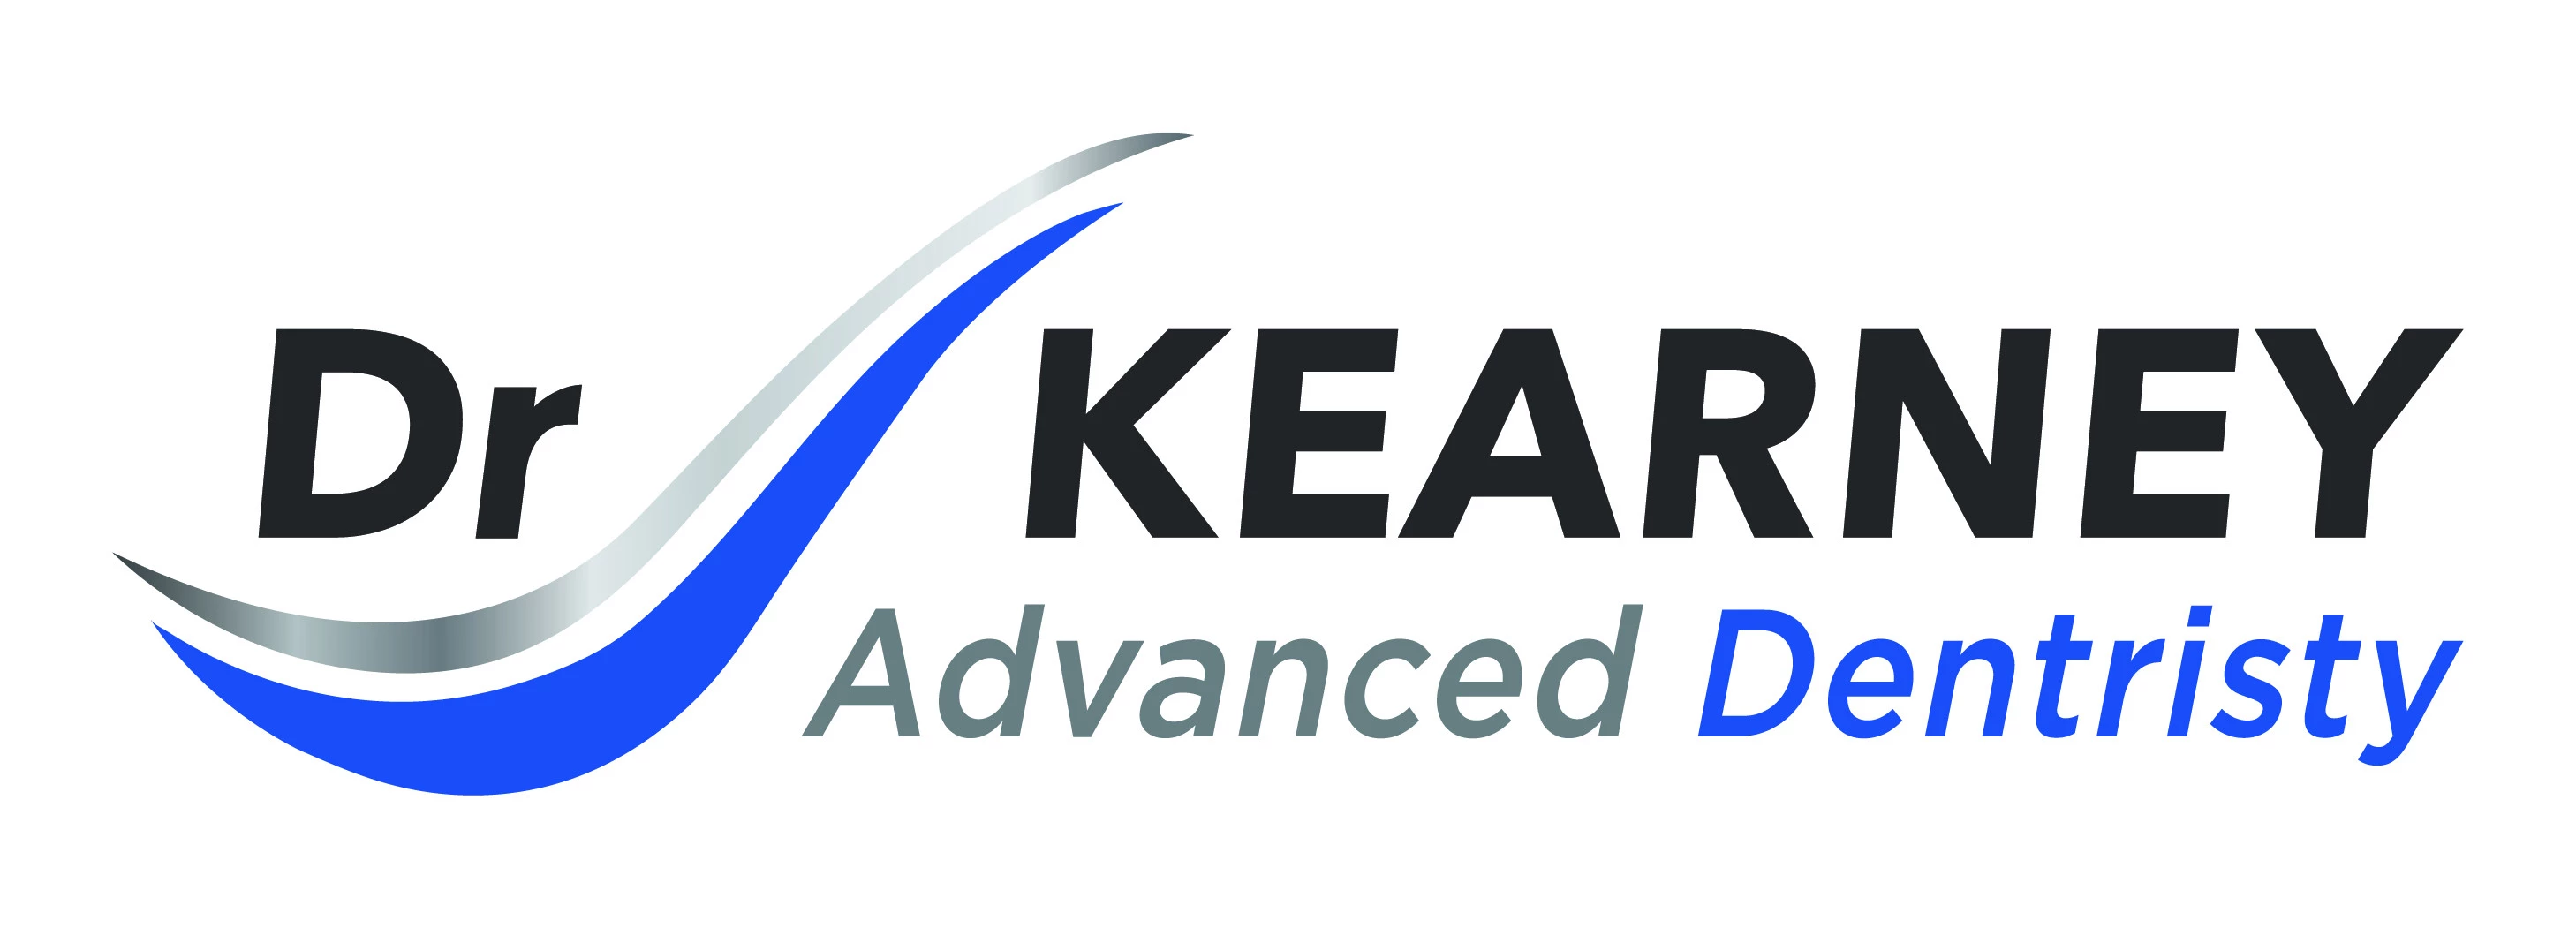 Dr Kearney Advanced Dentistry